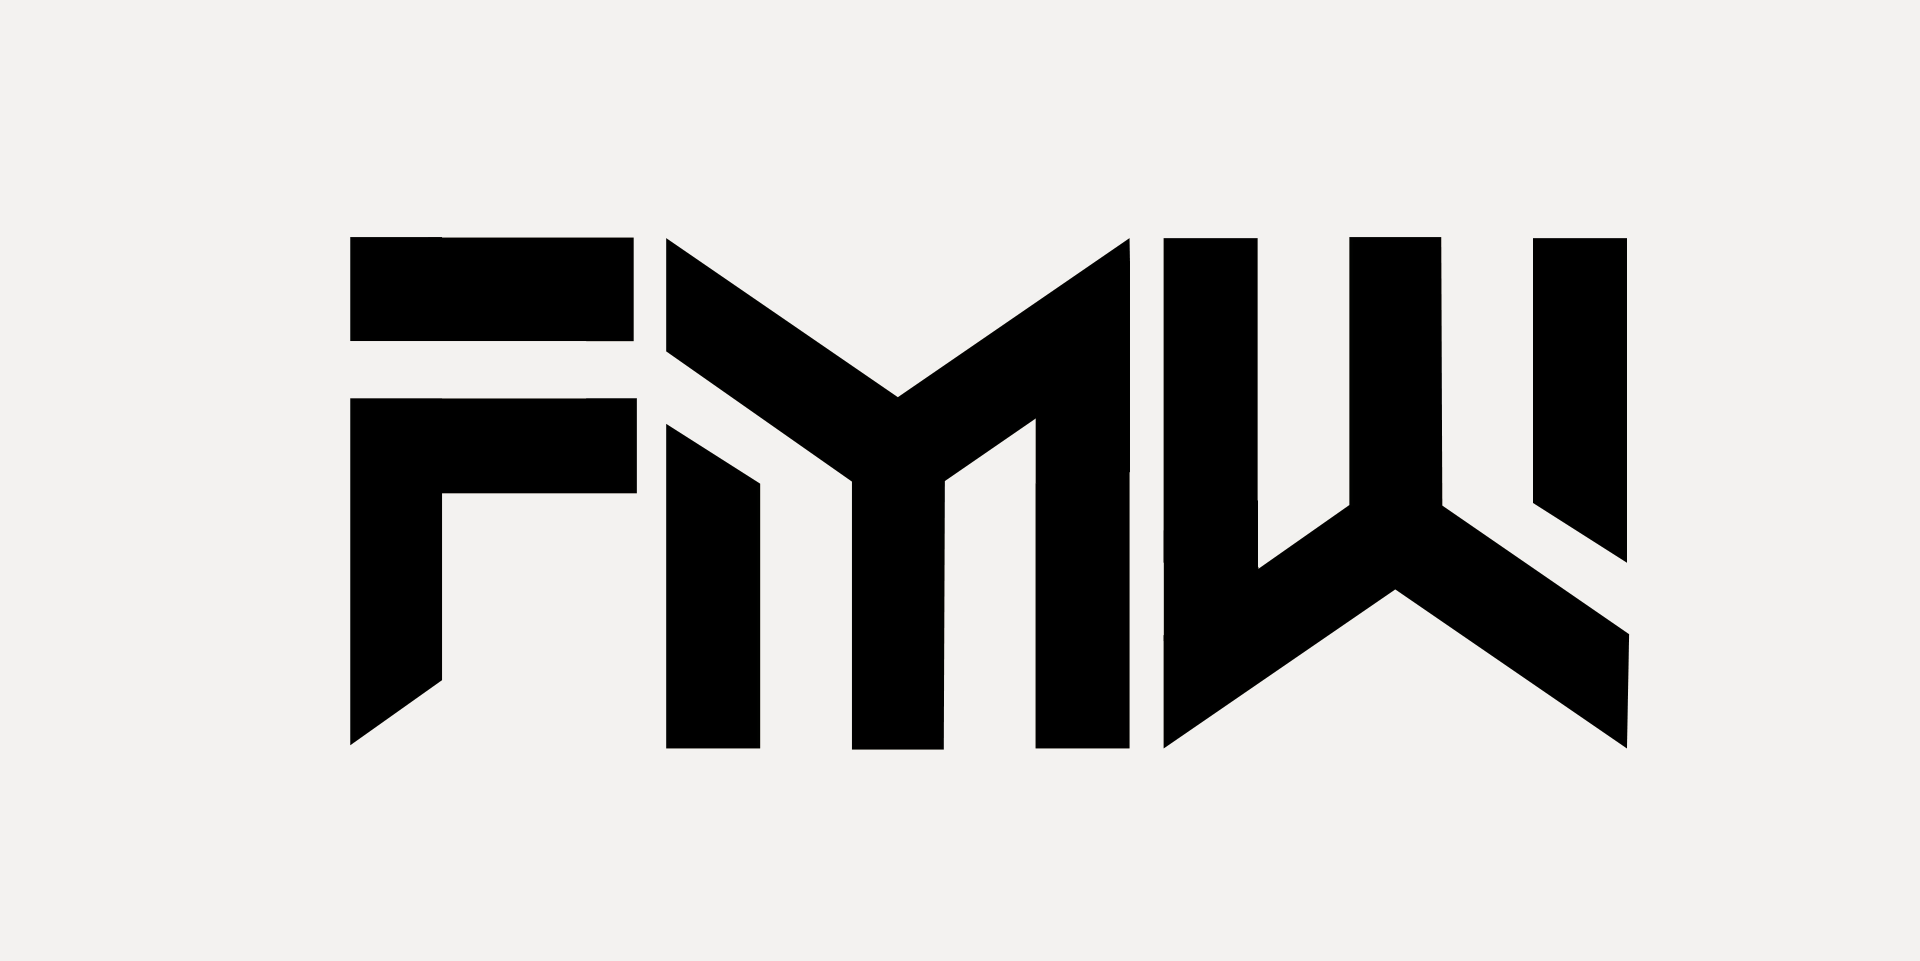 FMW Media Works Corp, Saturday, March 13, 2021, Press release picture